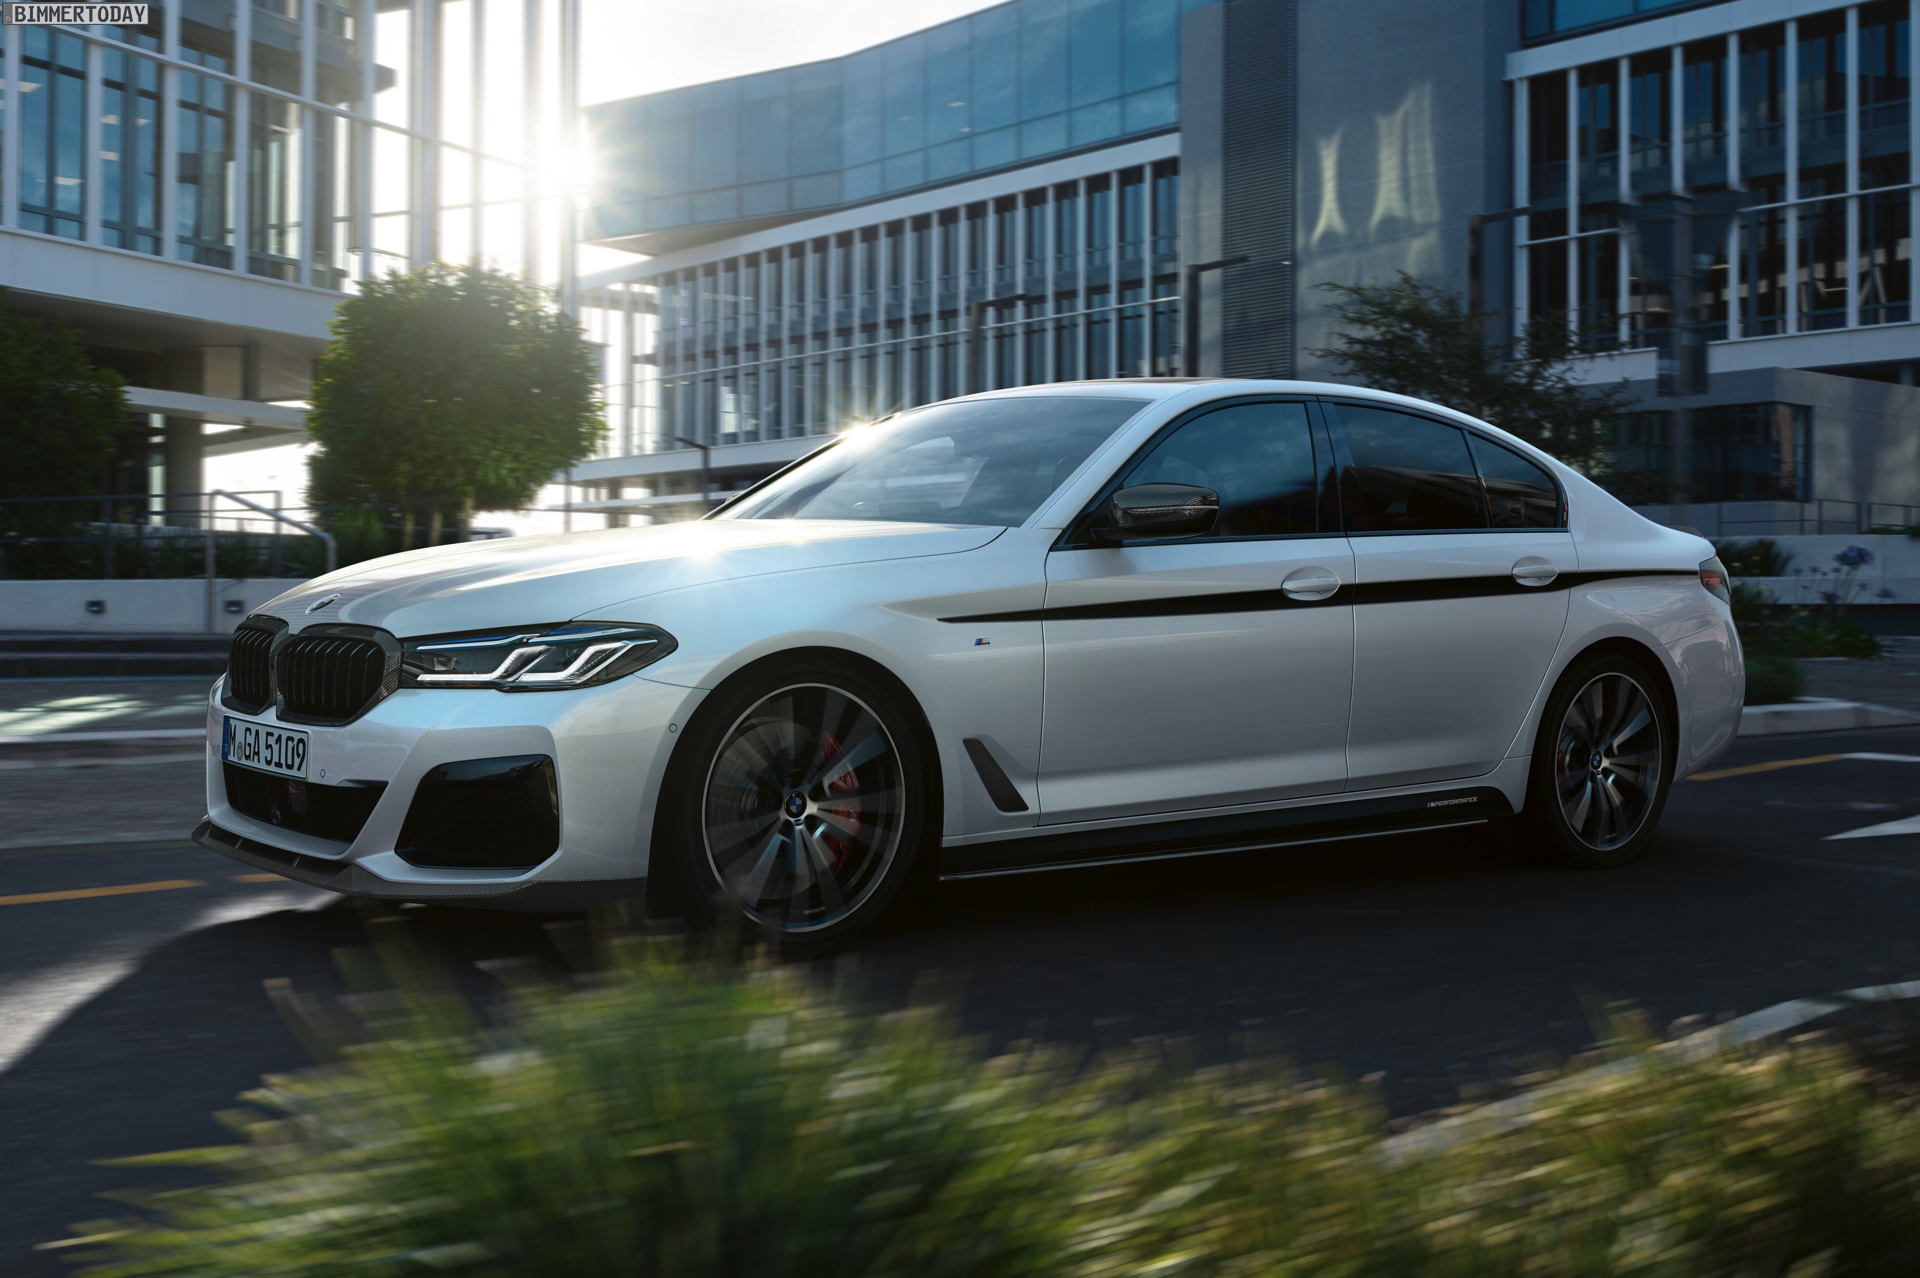 BMW 5er Facelift 2020: Erste Fotos mit M Performance-Tuning